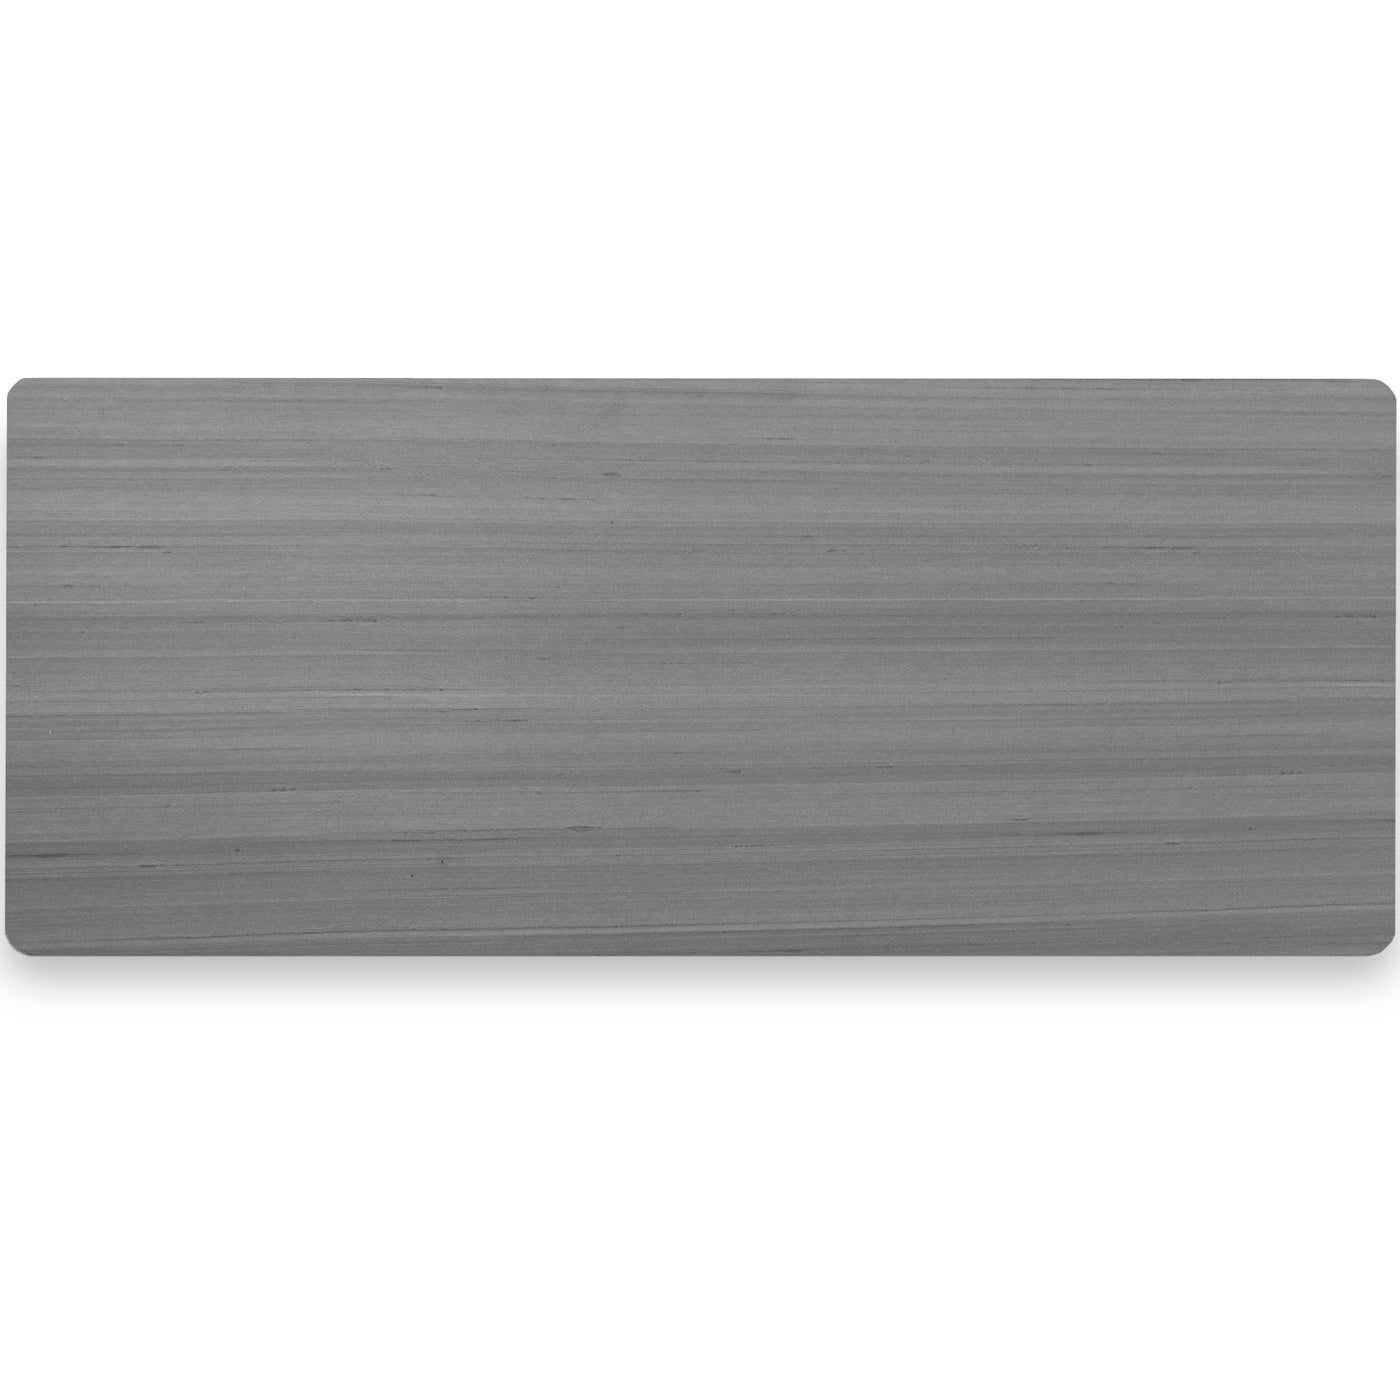 60” Dark Gray Table Top